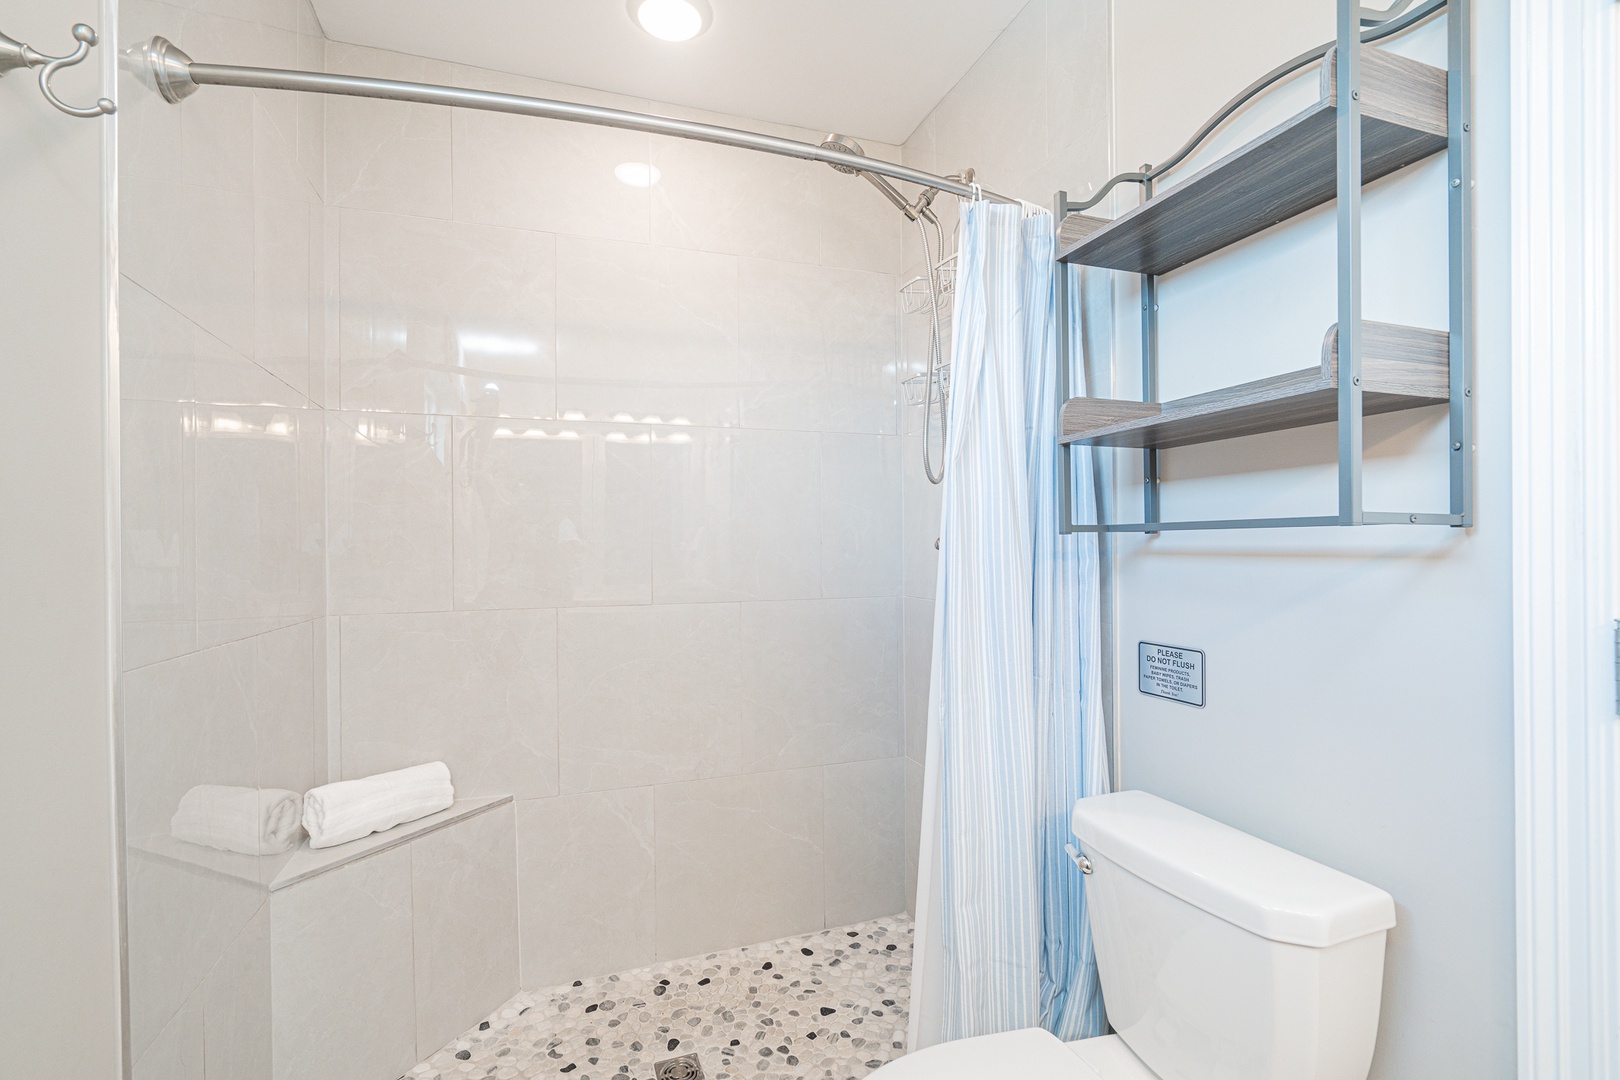 The 2nd floor full bathroom offers a dual vanity & walk-in shower